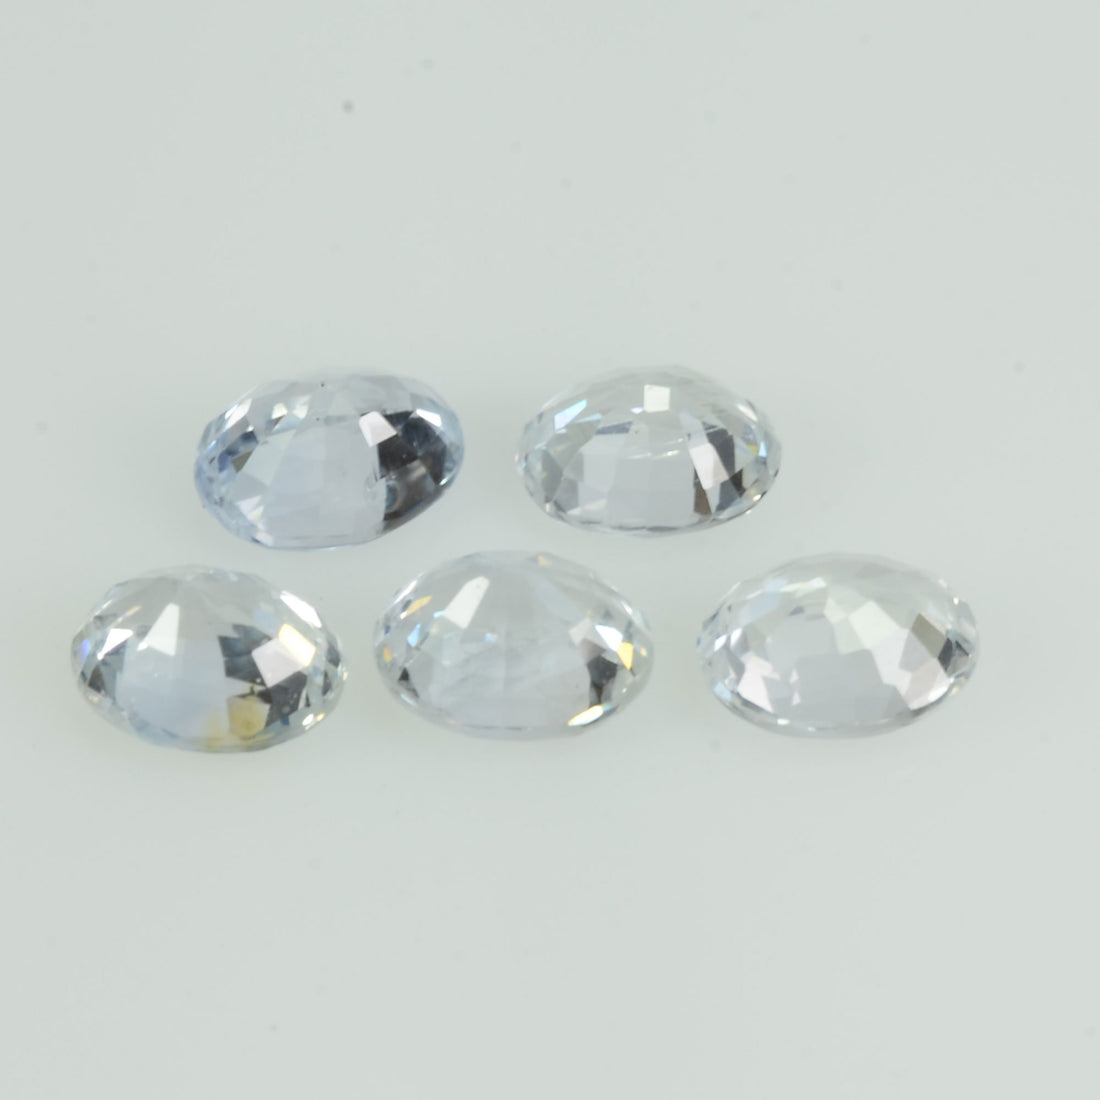 5X4 Natural White Sapphire Loose  Gemstone Oval Cut - Thai Gems Export Ltd.